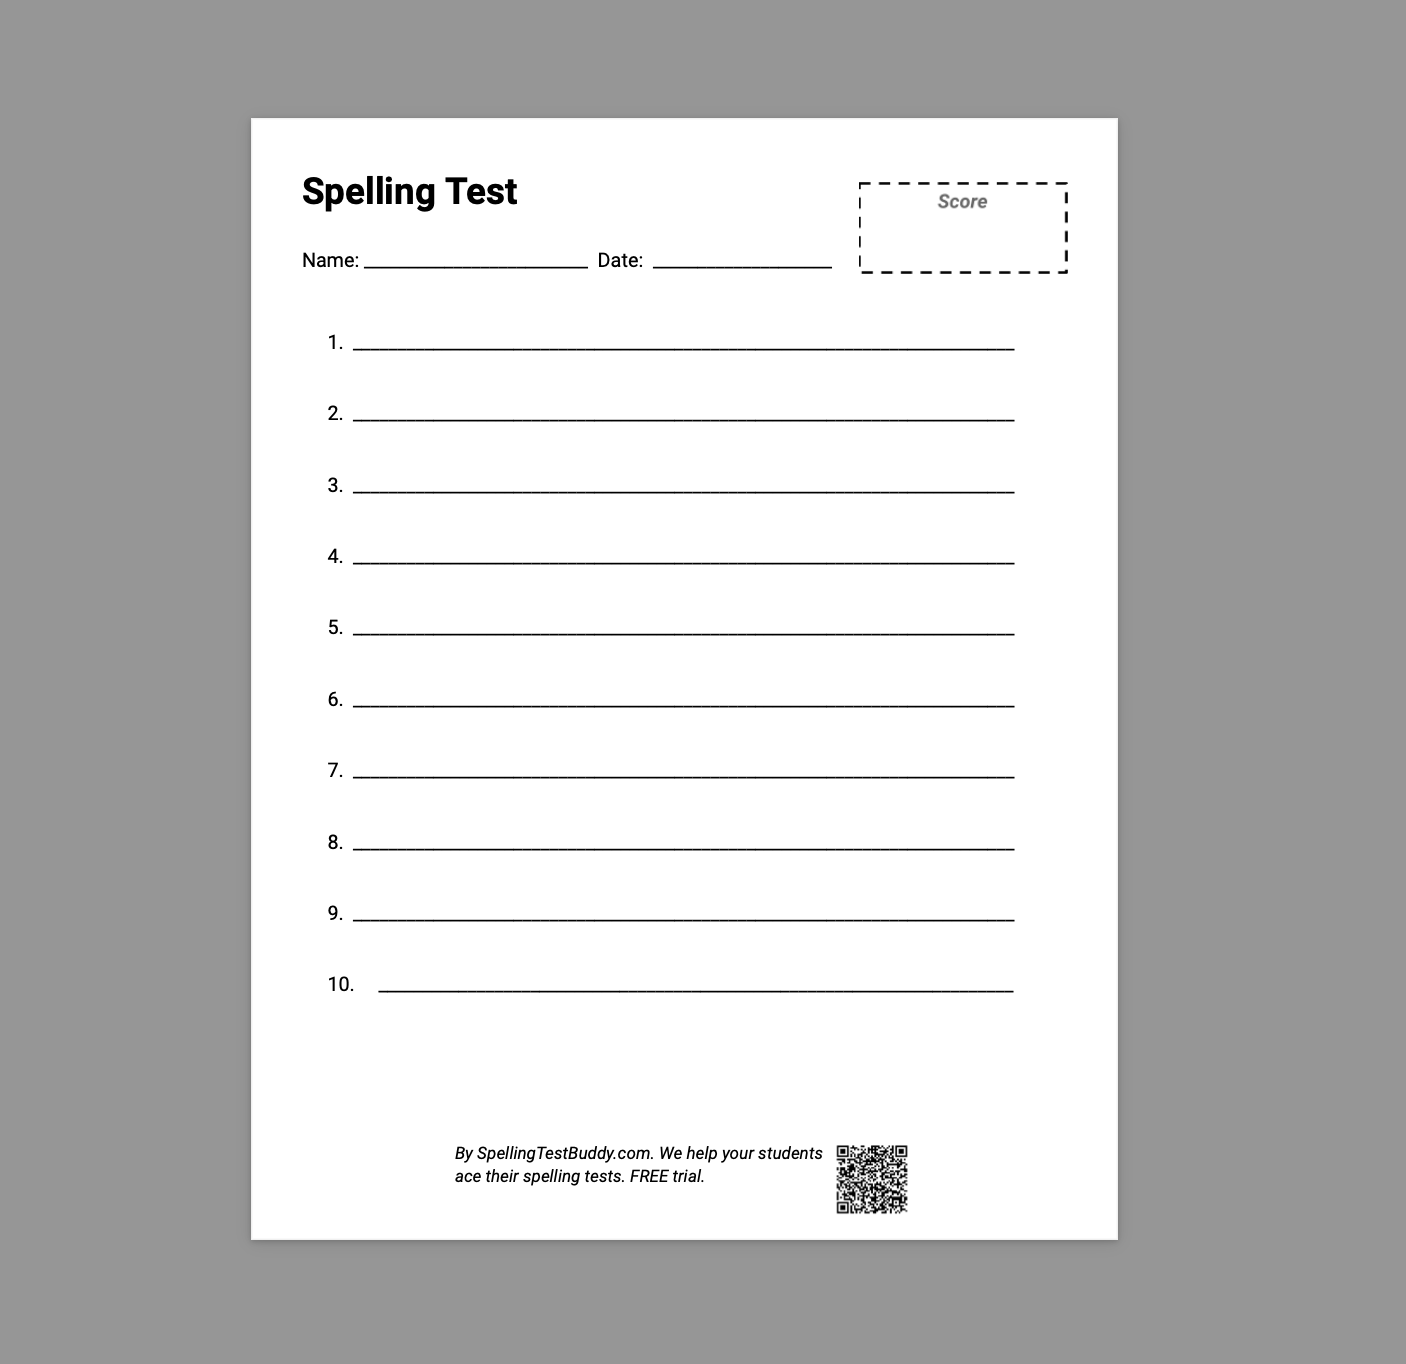 Spelling Test Paper - 10 words